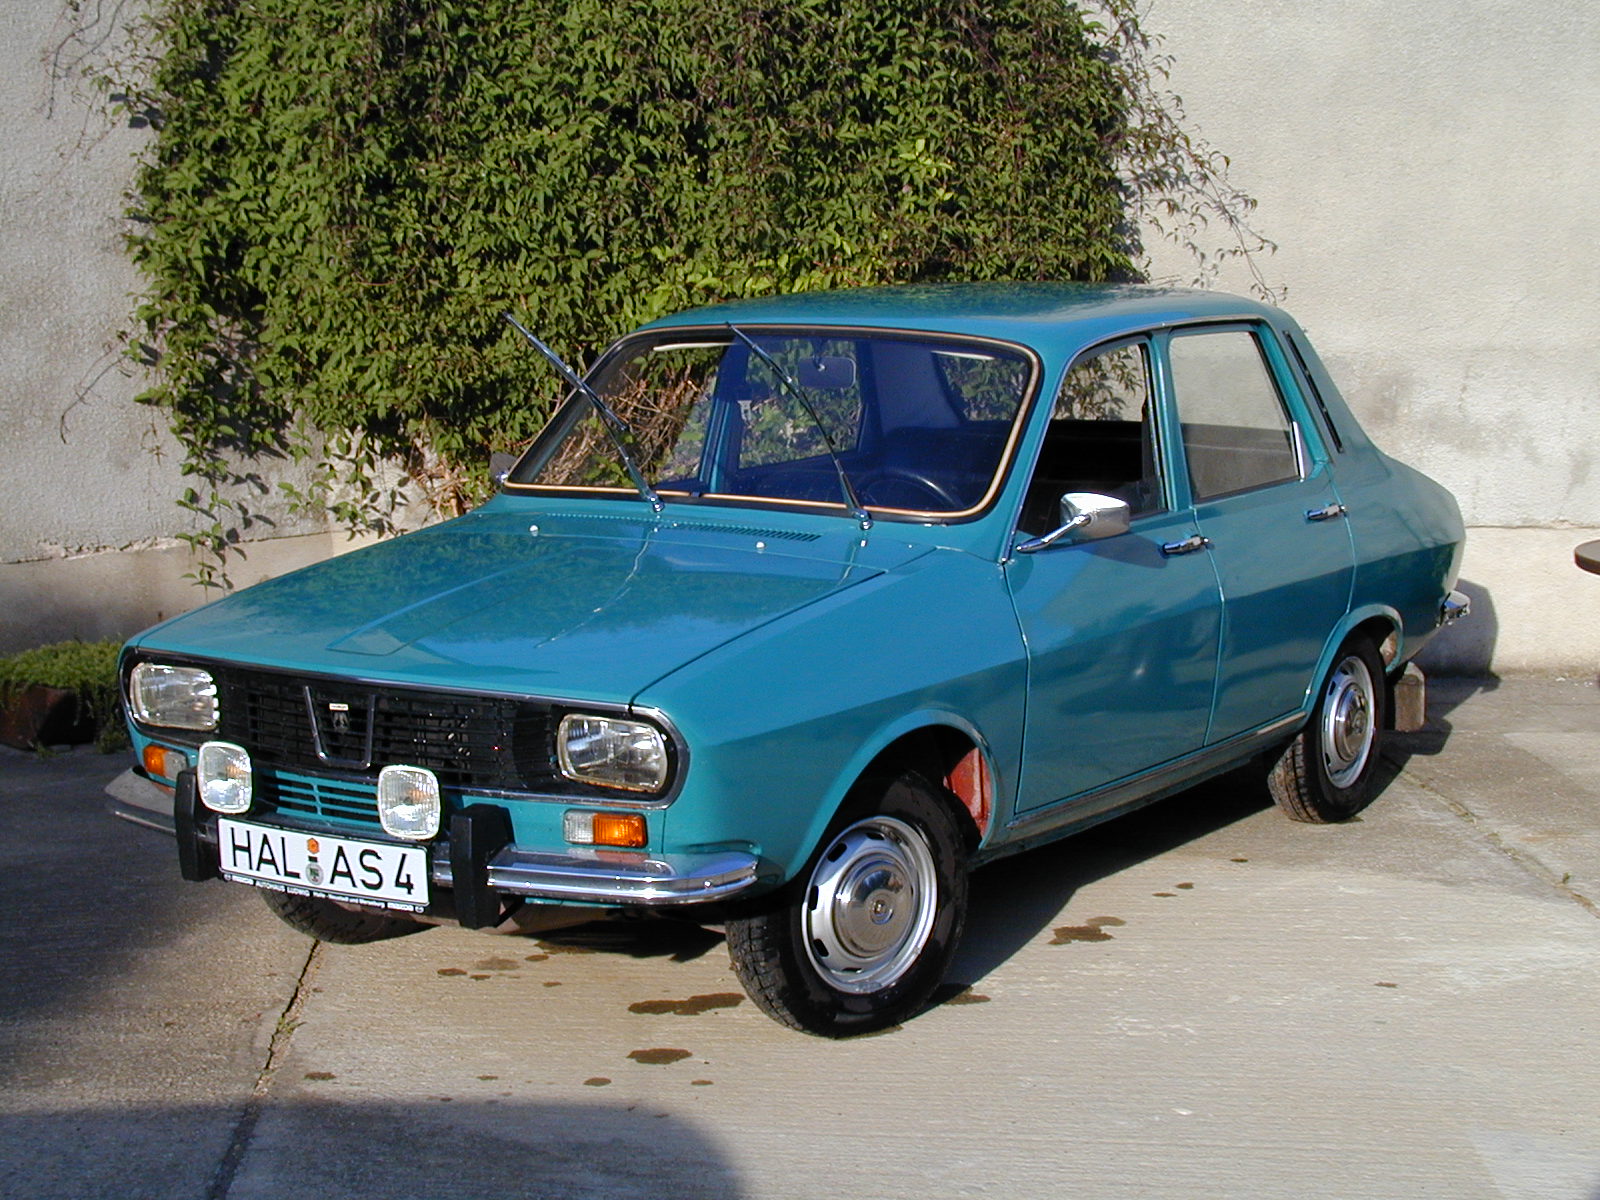 http://upload.wikimedia.org/wikipedia/commons/3/31/Dacia_1300.JPG